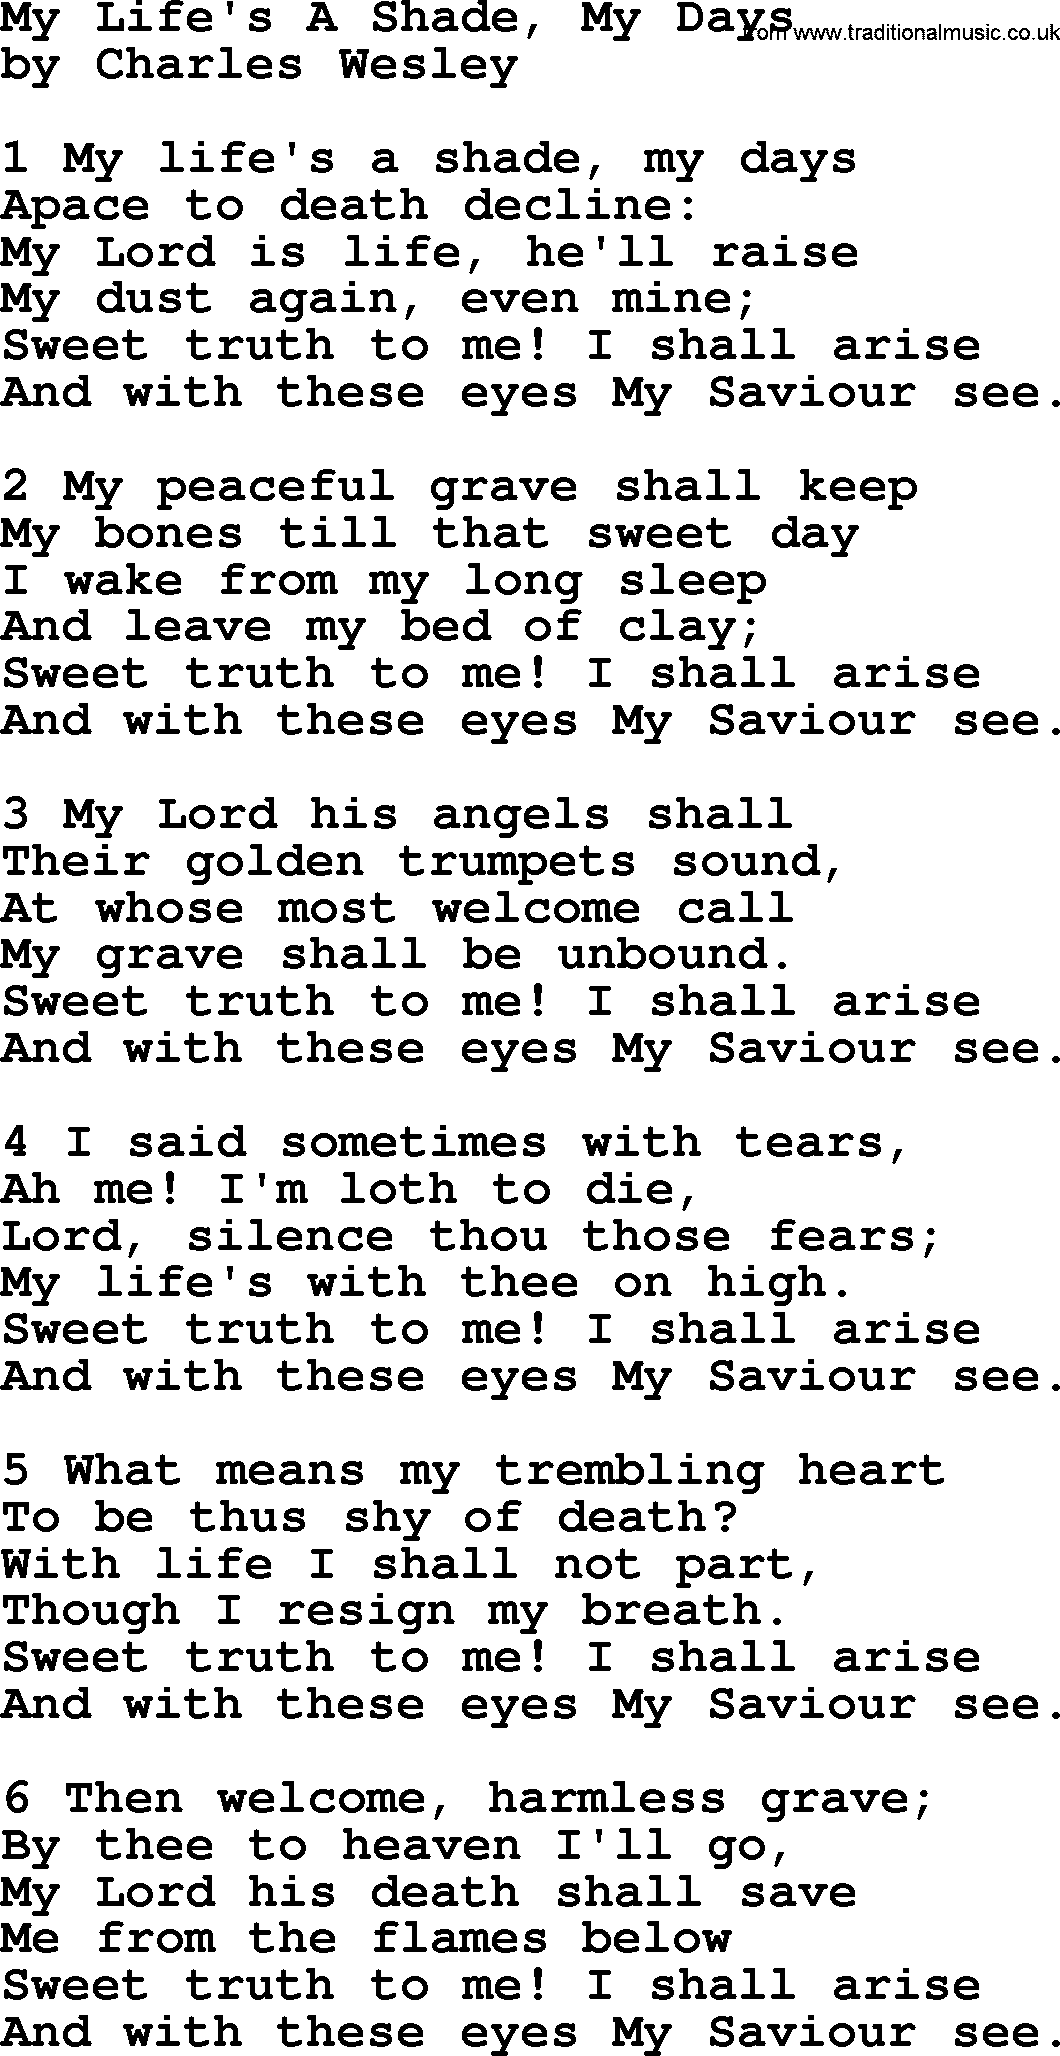 Charles Wesley hymn: My Life's A Shade, My Days, lyrics